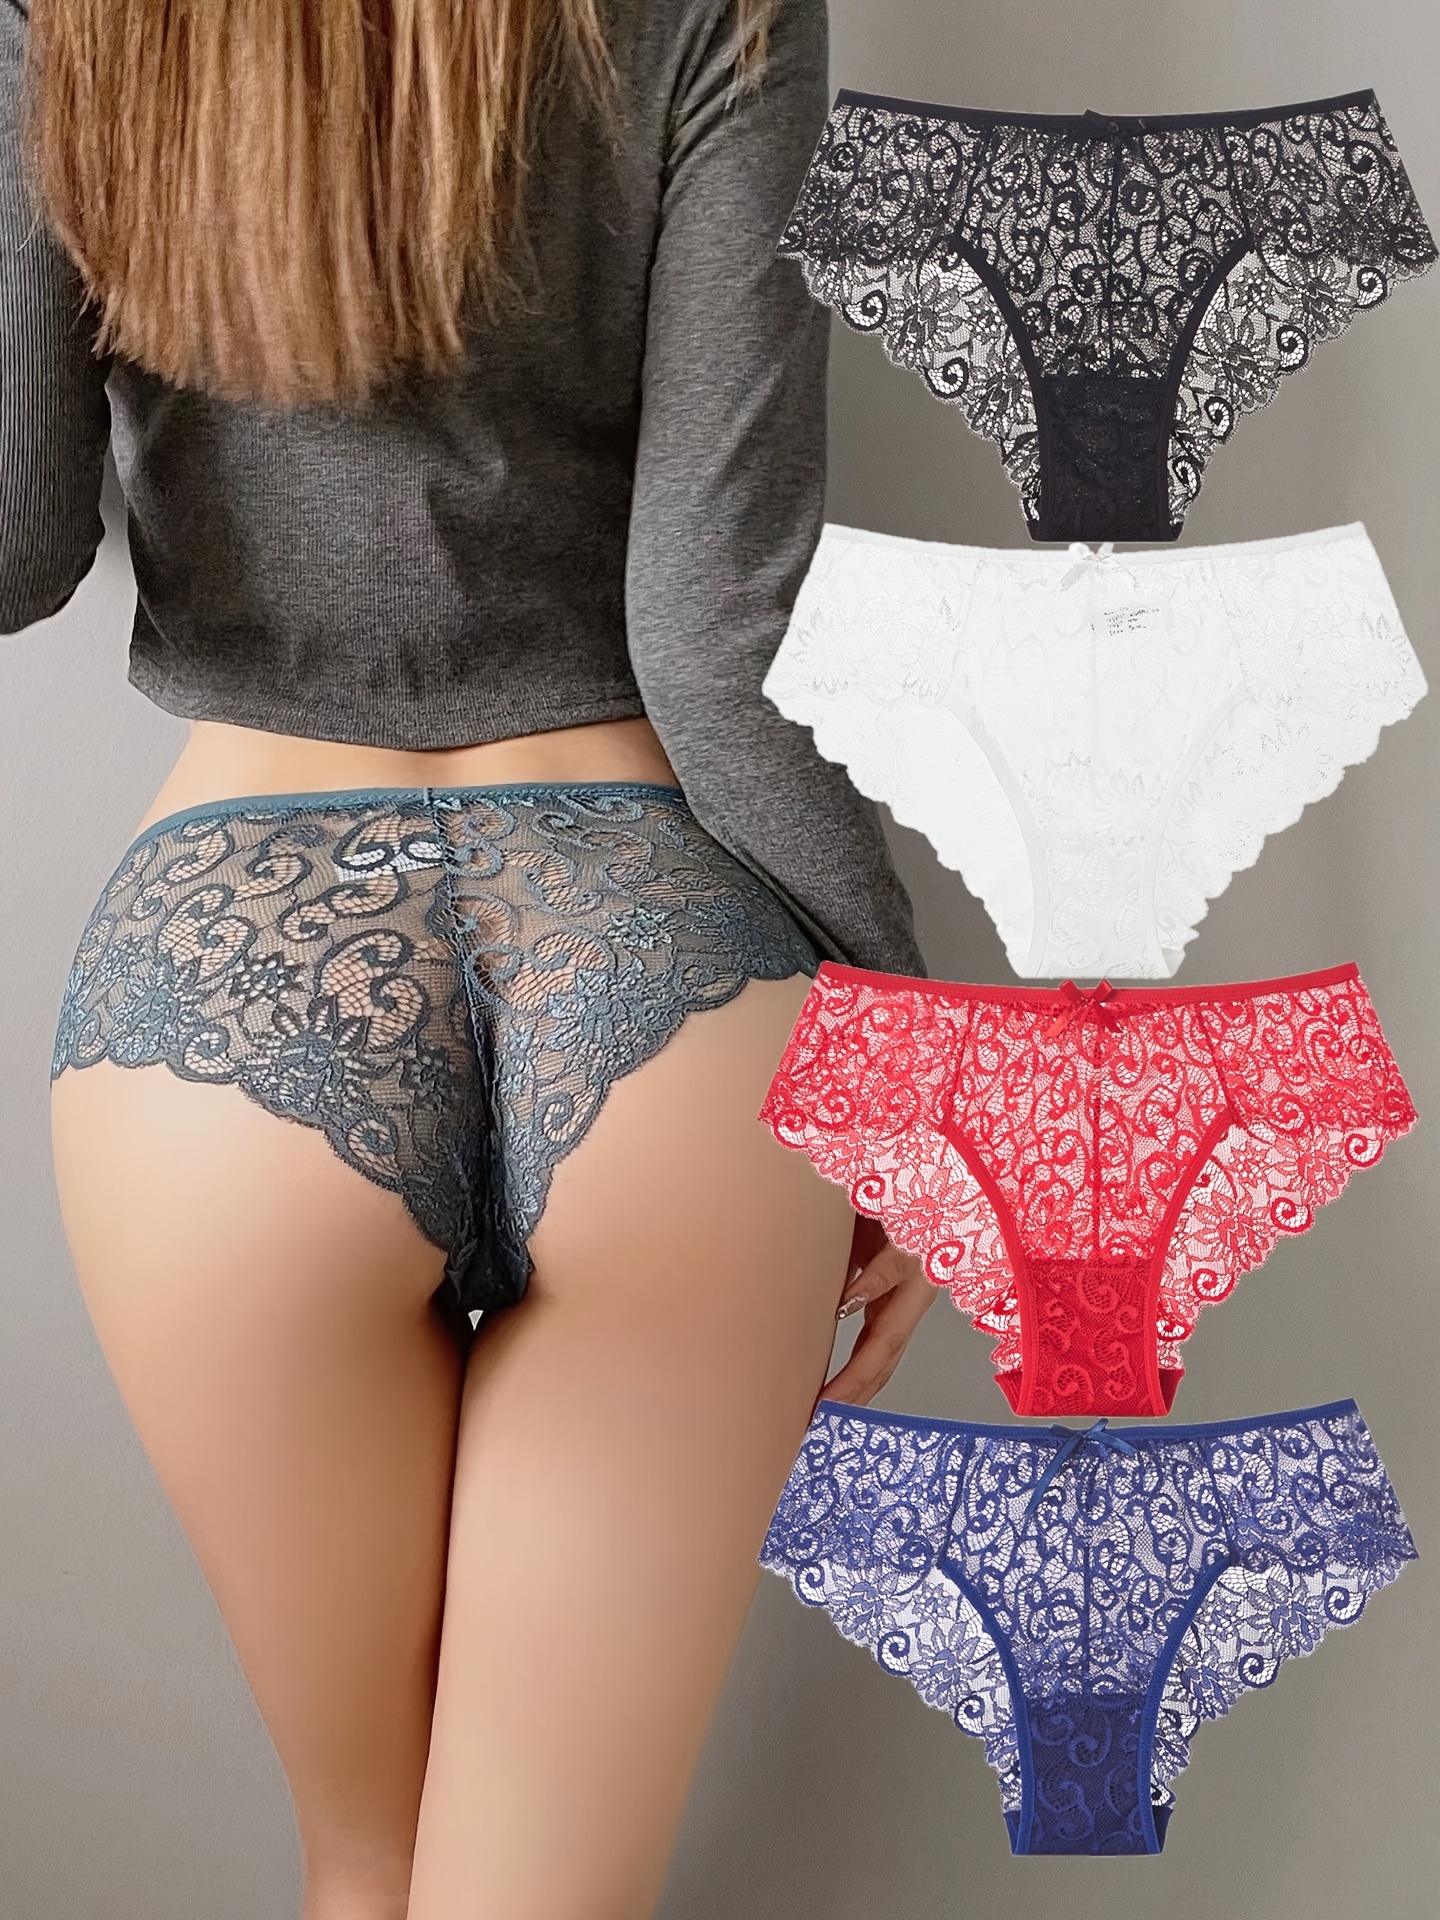 Fashion Women's Underwear 4pcs/lot Women Lace Panties Seamless